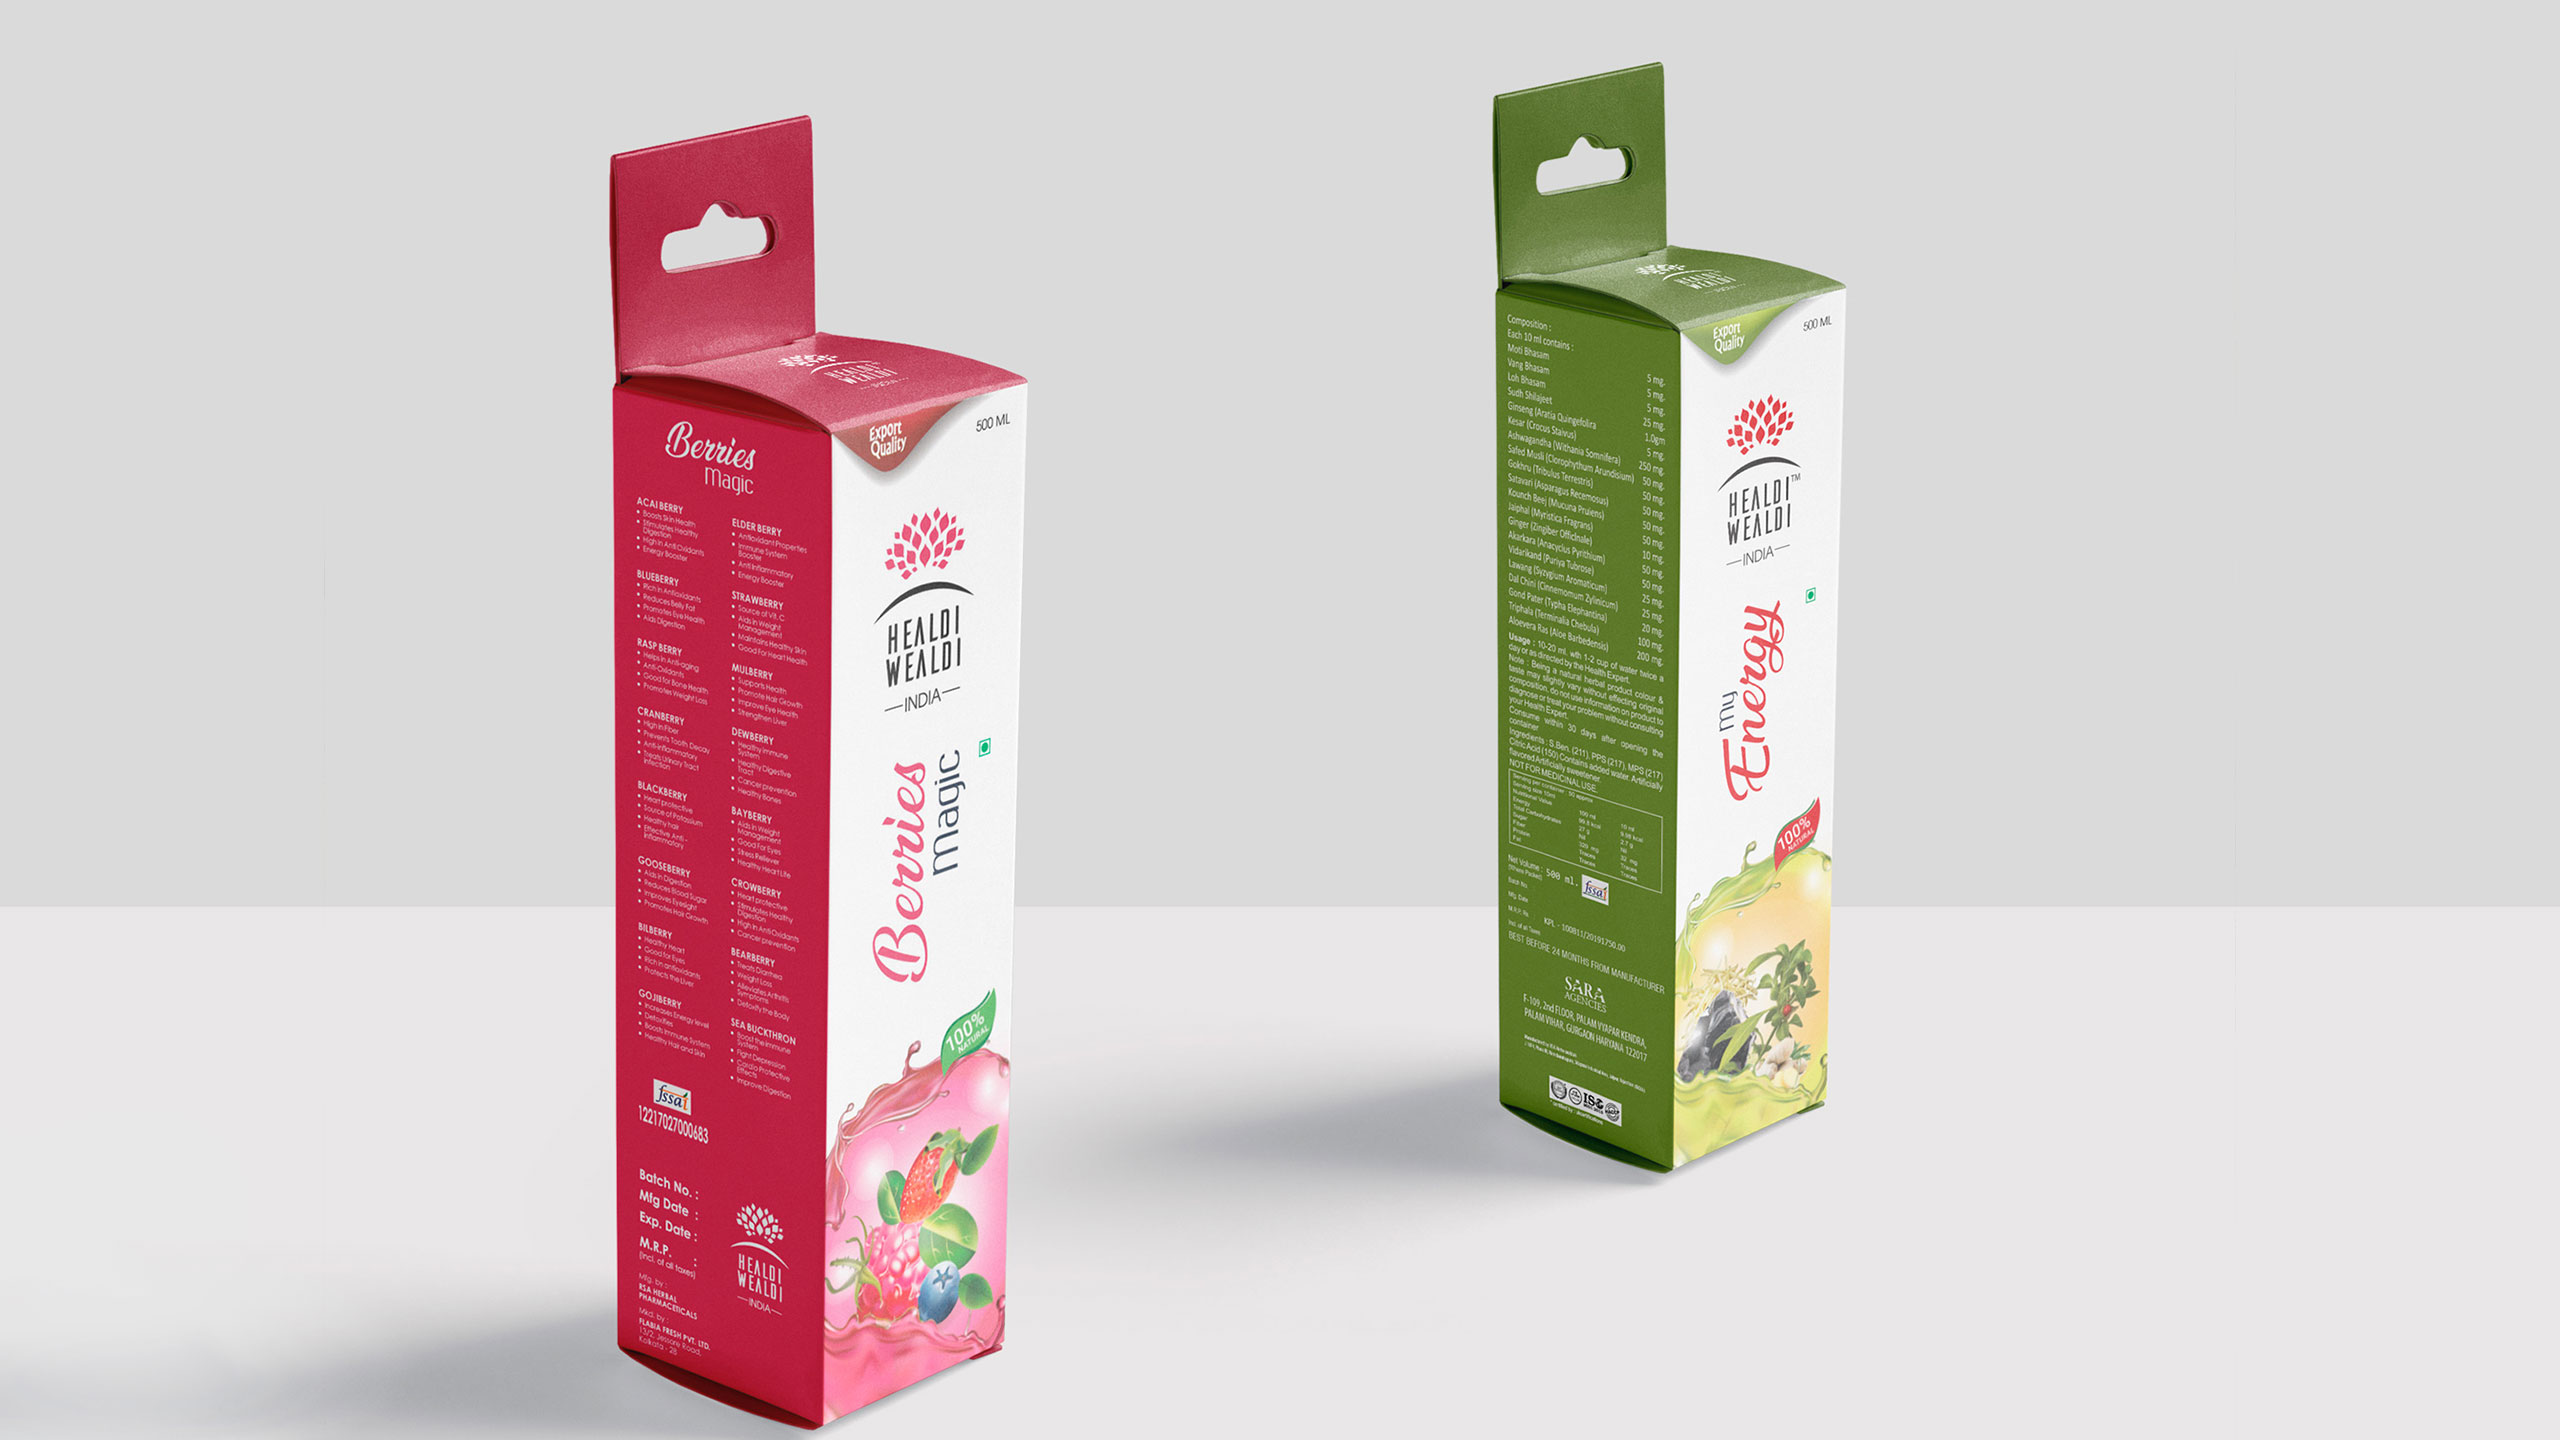 healdi wealdi packaging juice